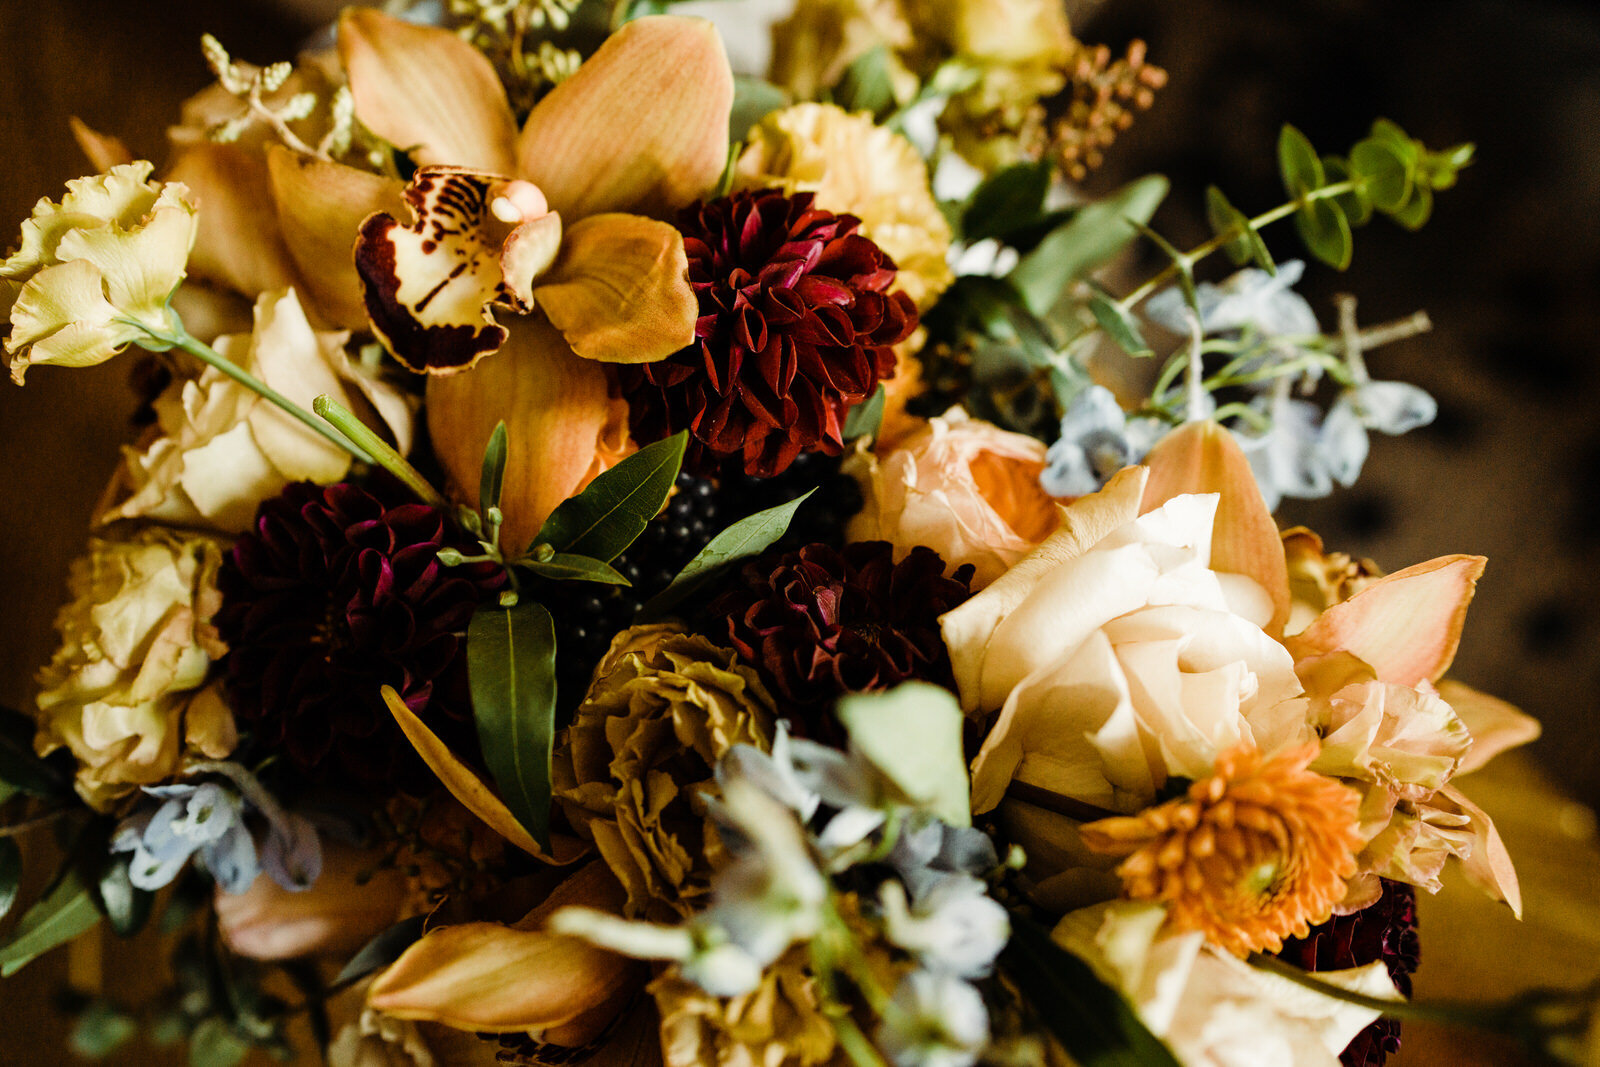 Autumn, earthy bouquet at modern, feminist wedding